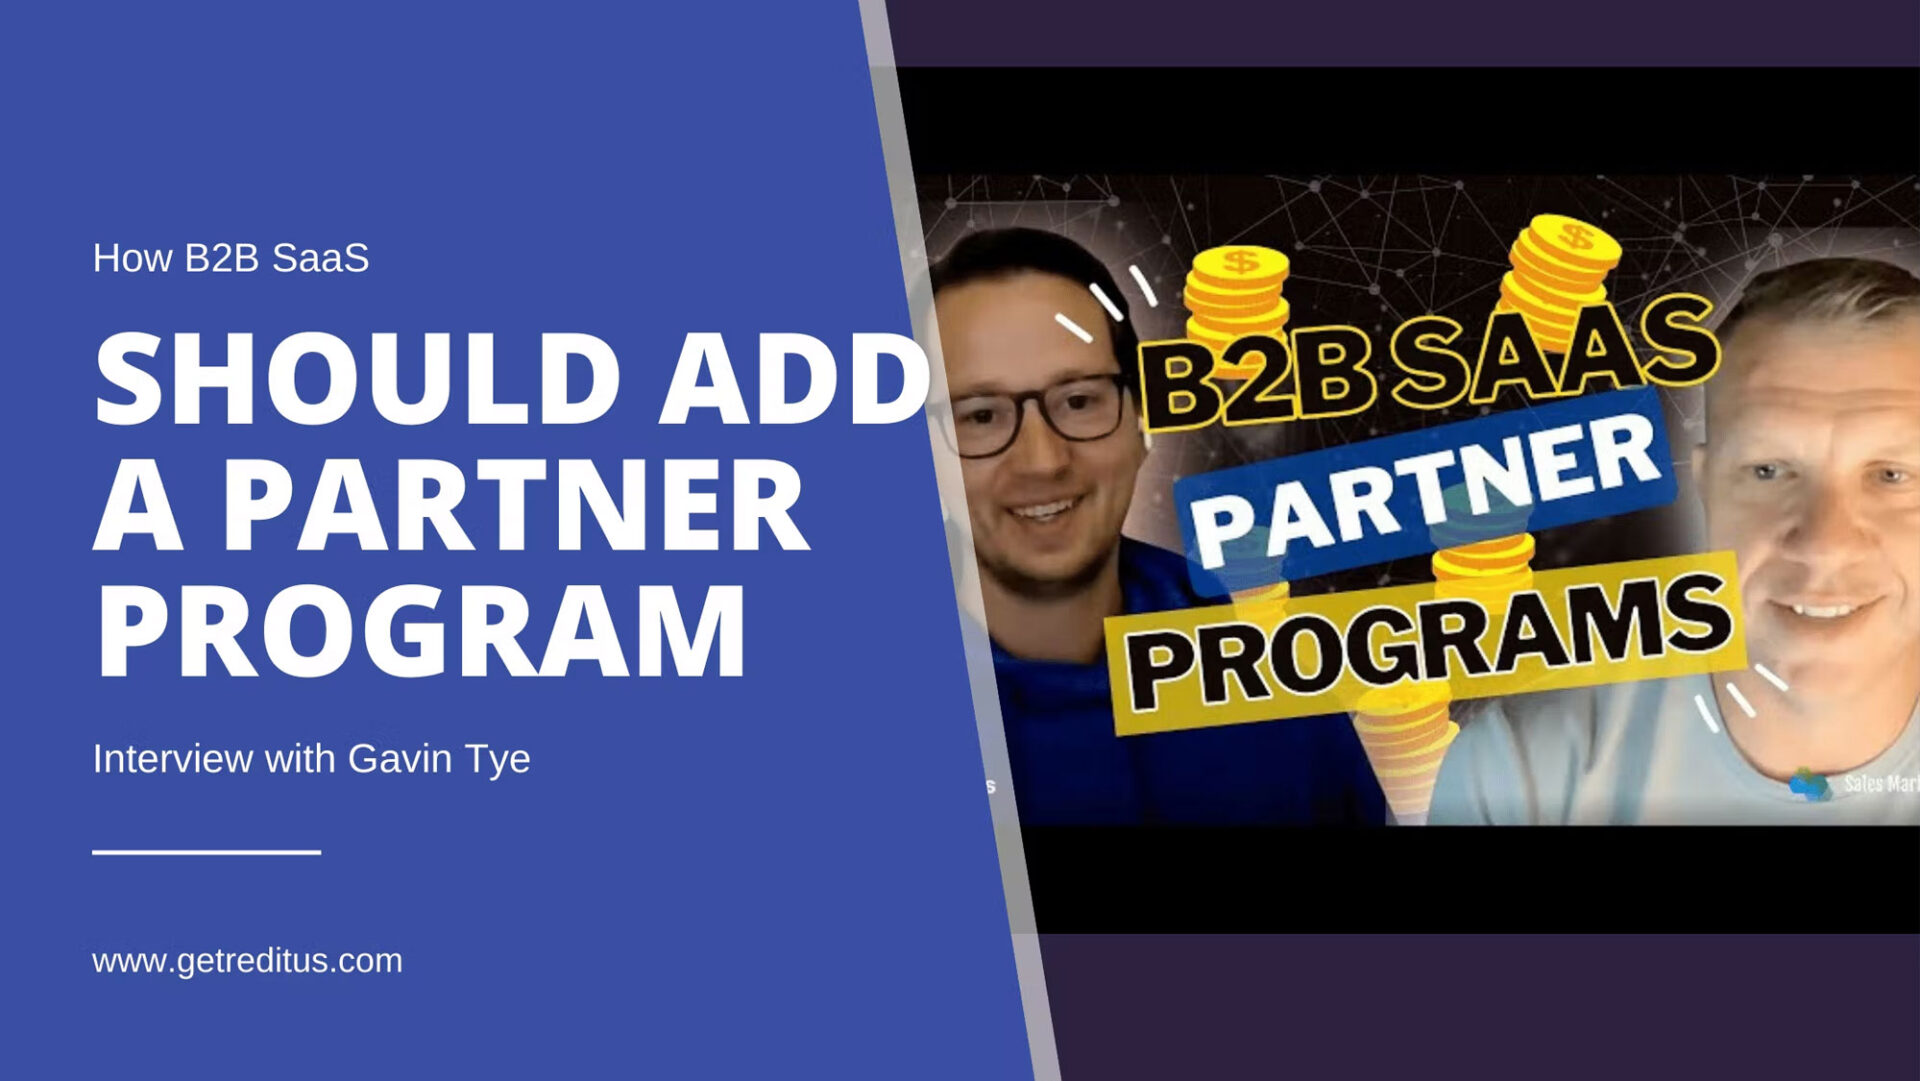 How B2B SaaS Should Add A Partner Program